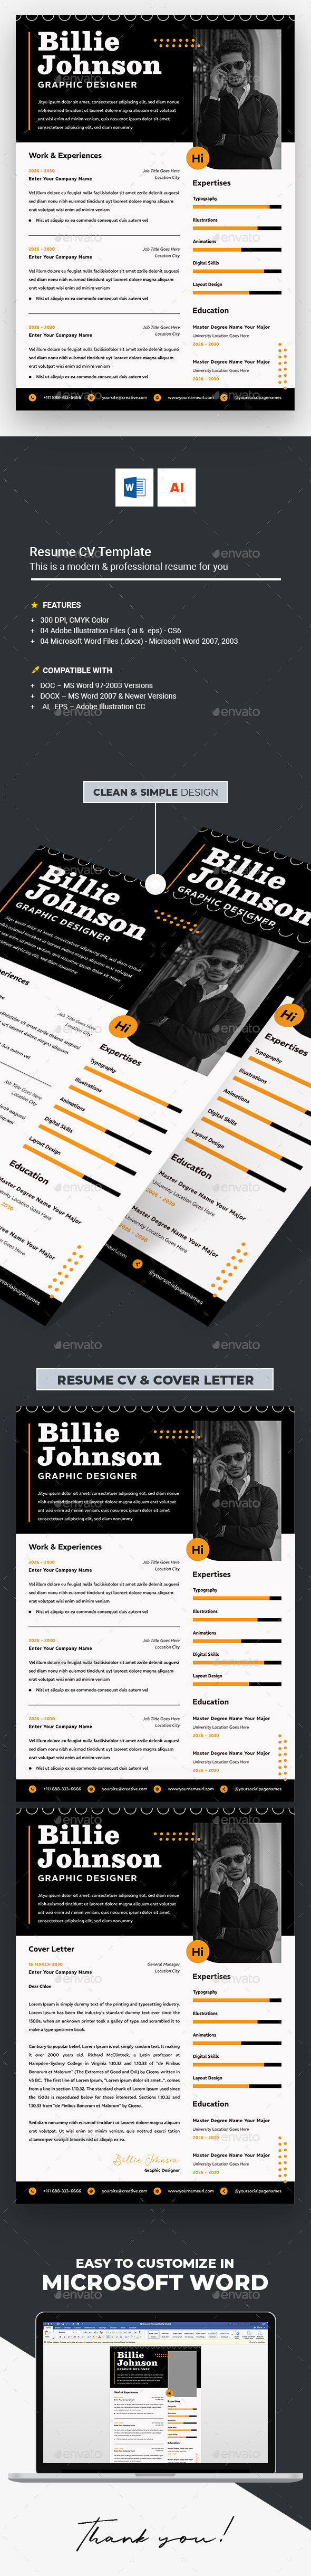 [DOWNLOAD]Simple Resume CV